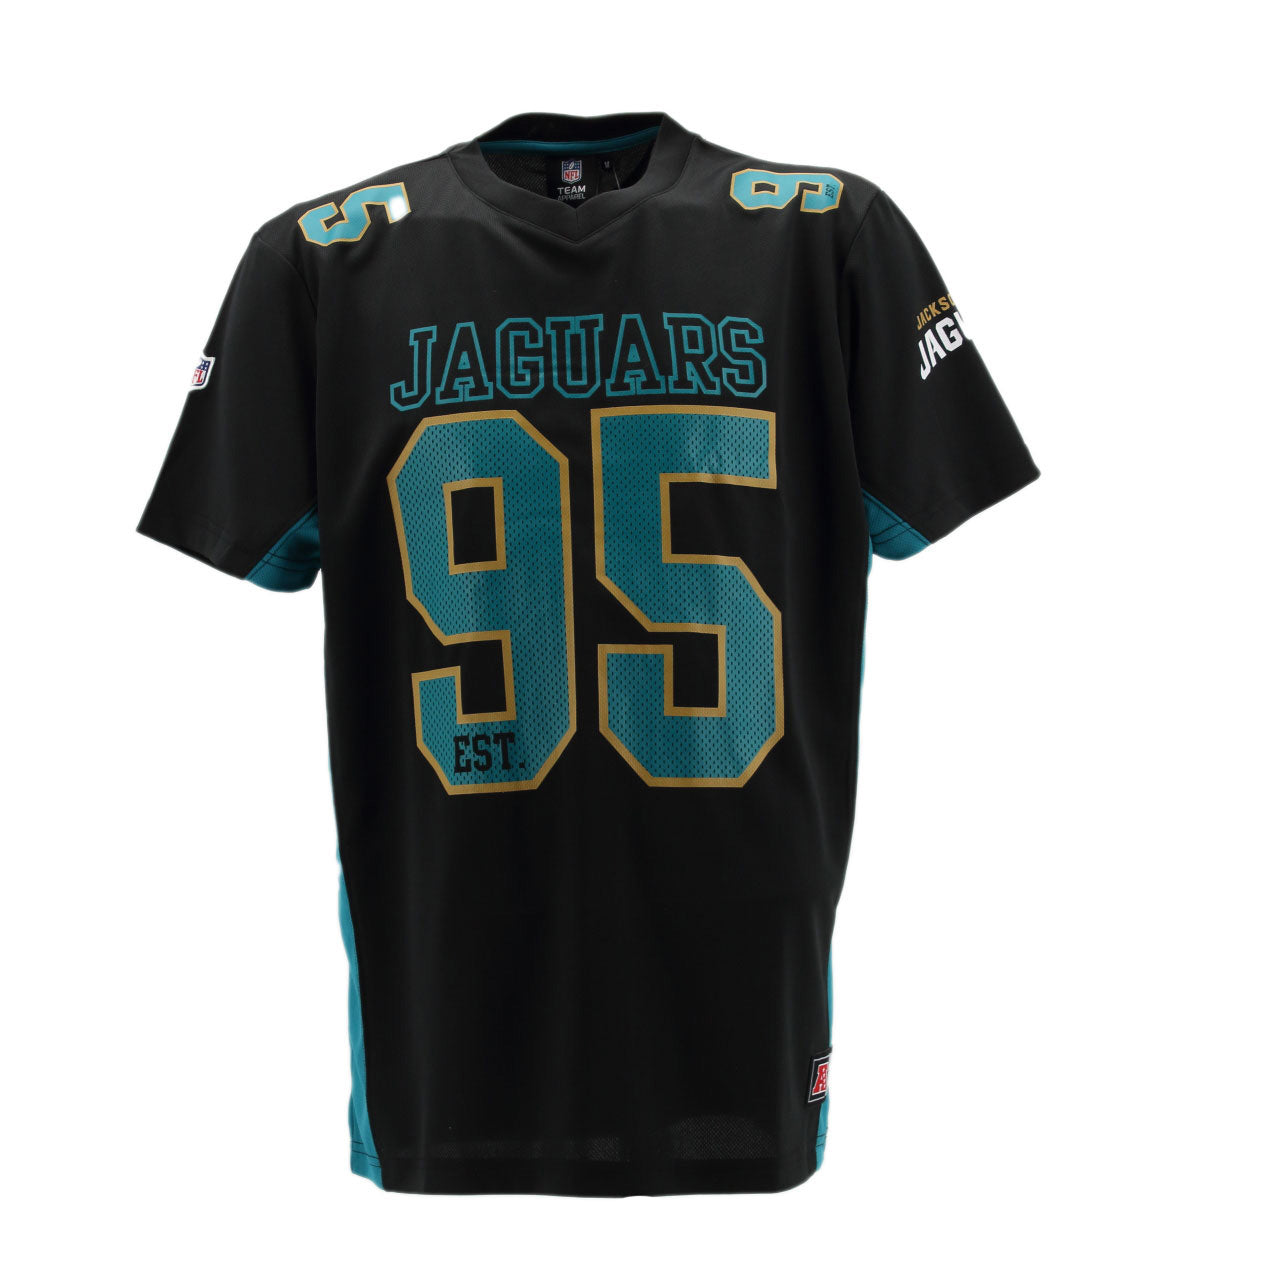 Fanatics NFL Jacksonville Jaguars Herren T-Shirt Trikot Nr 95 schwarz MJJ2705DB